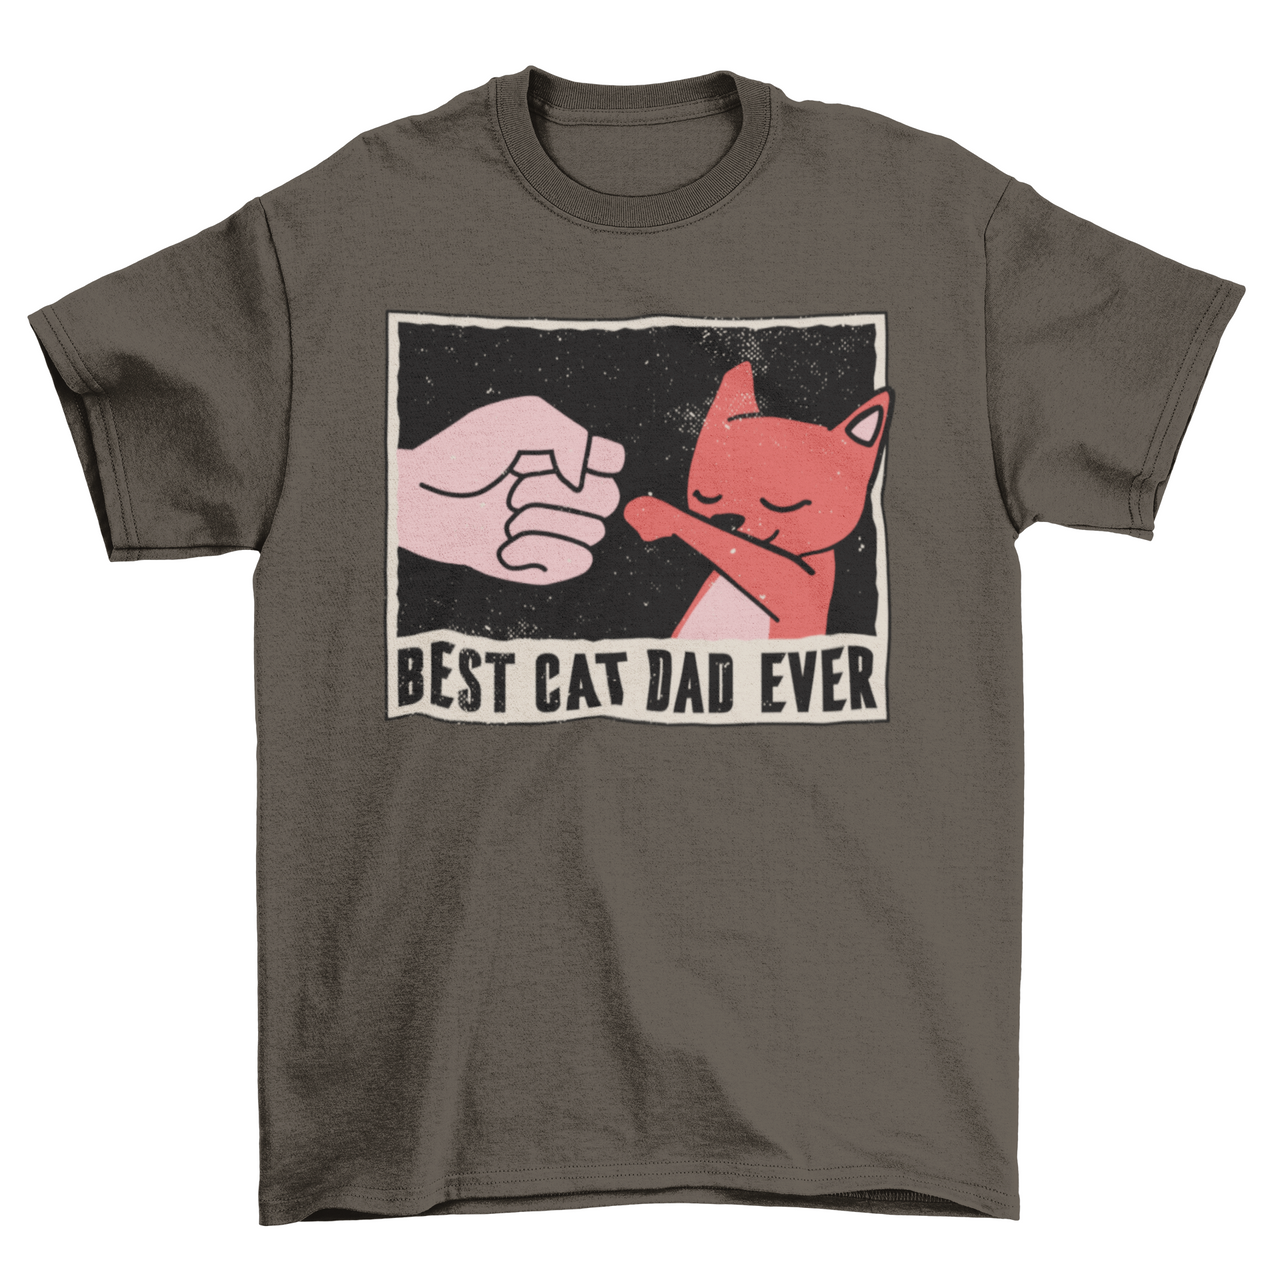 Best Cat Dad Ever T-shirt - Mercantile Mountain